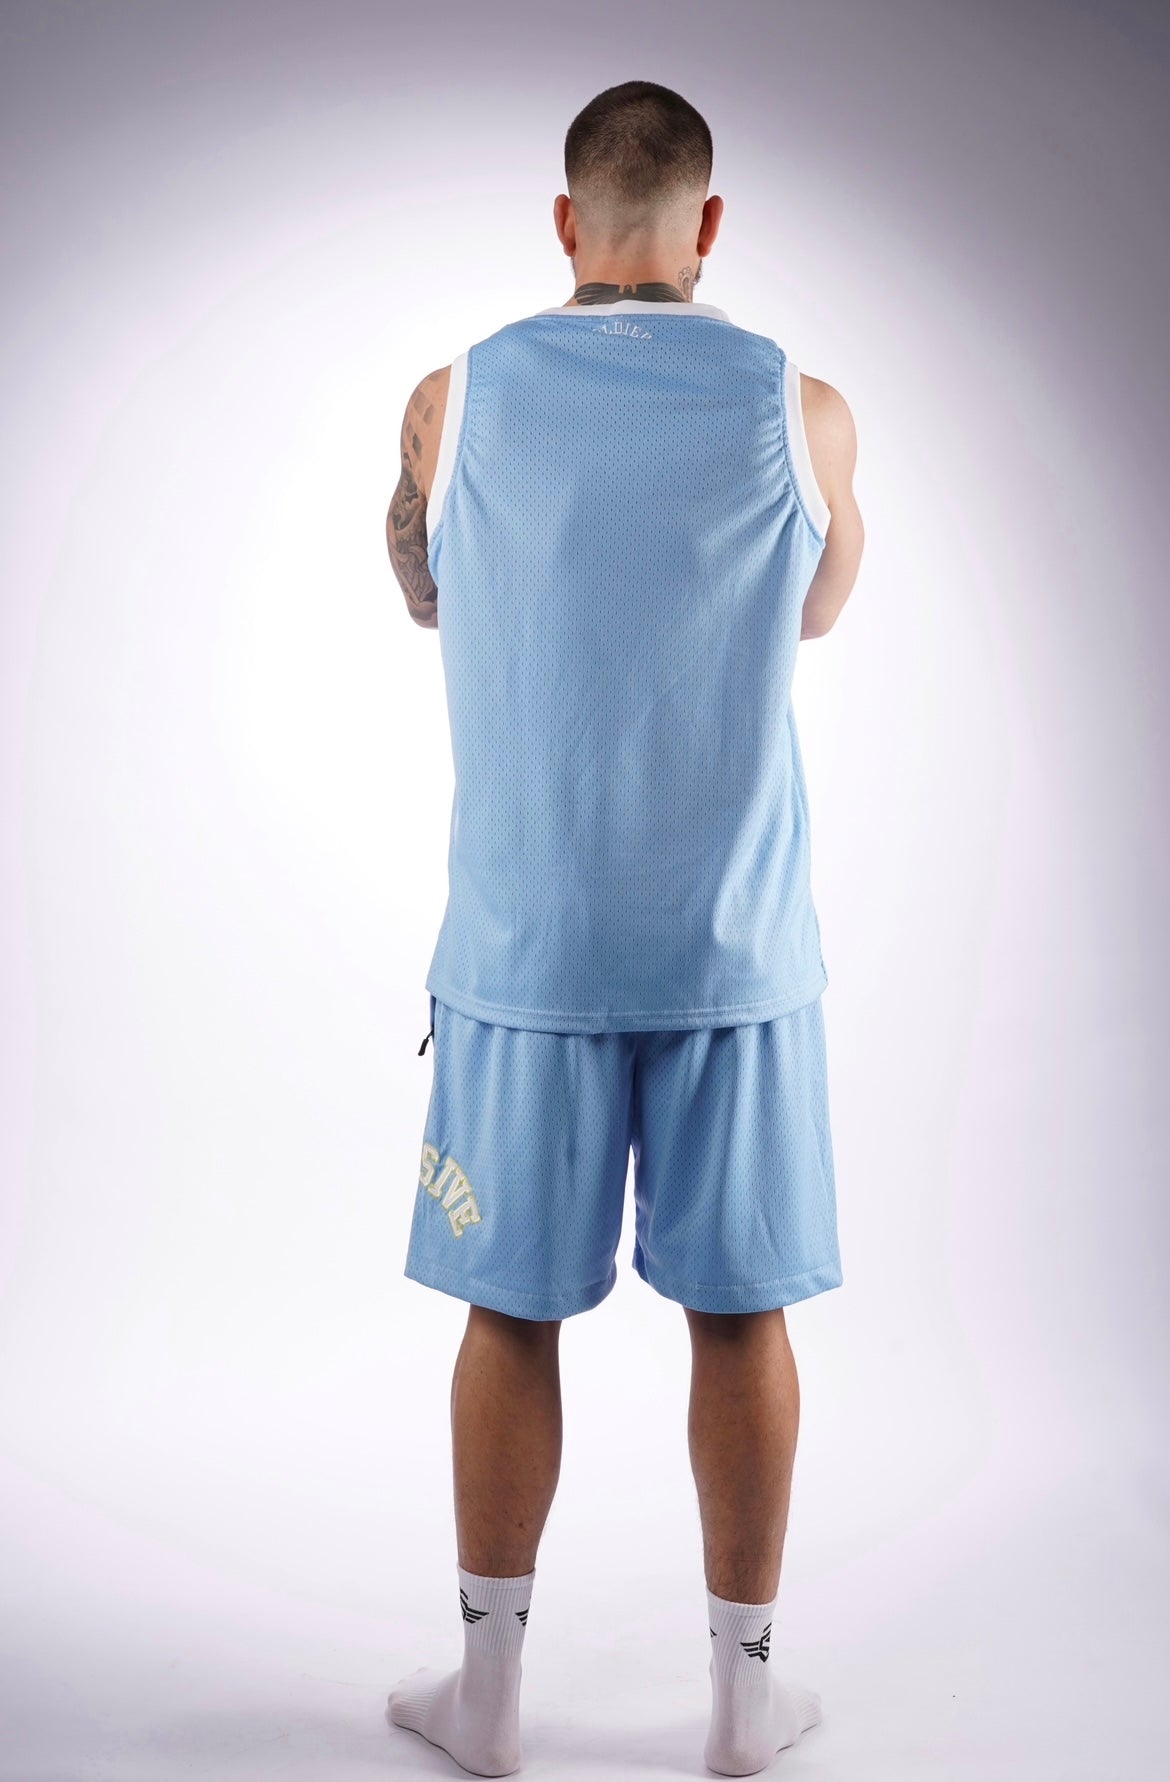 Massive Basketball Shorts light Blue